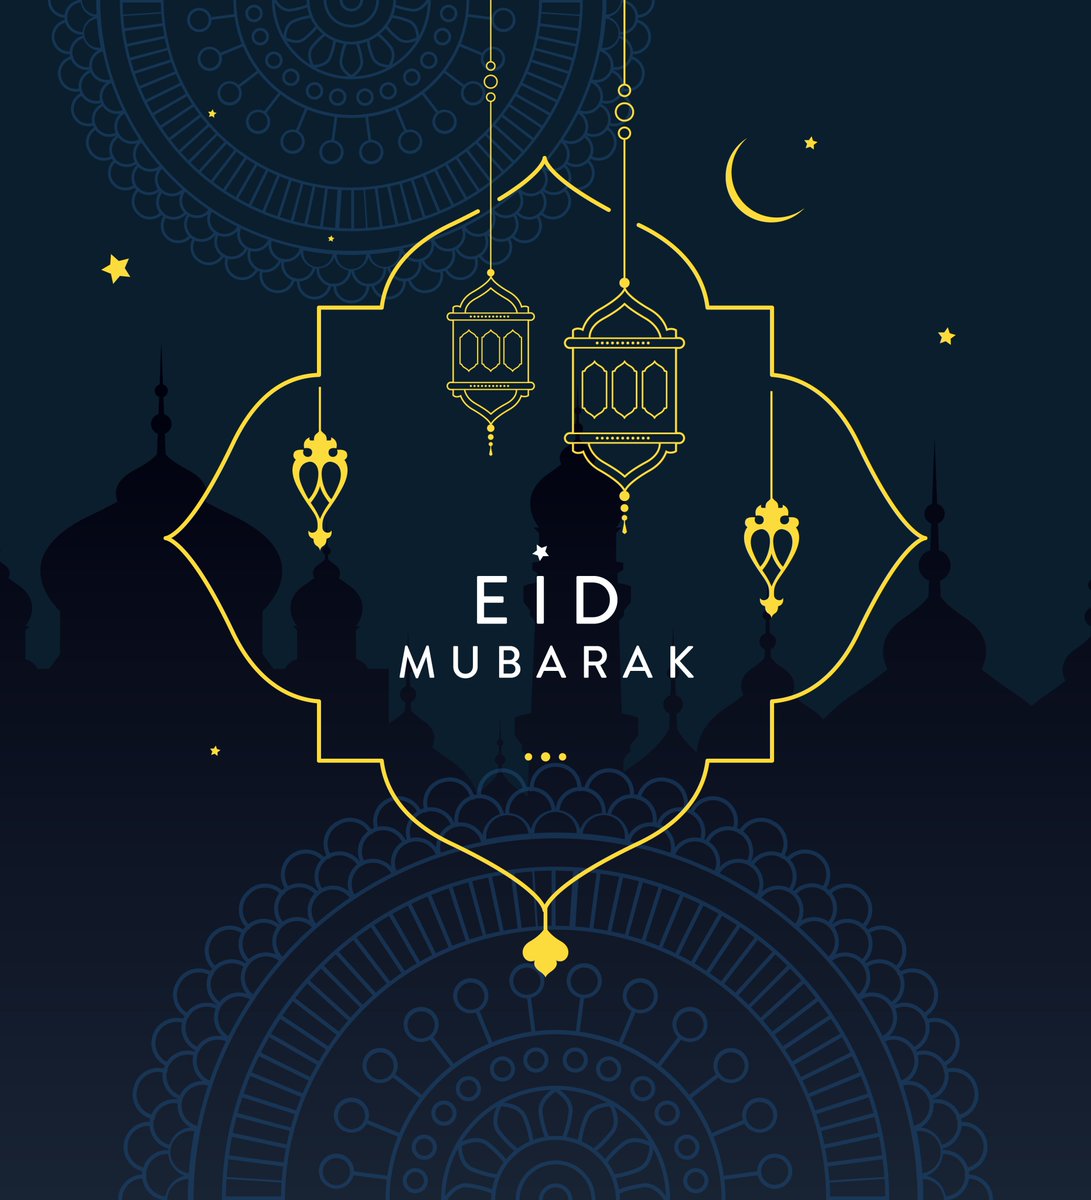 Eid Mubarak to all who celebrate from the Minnesota House DFL.